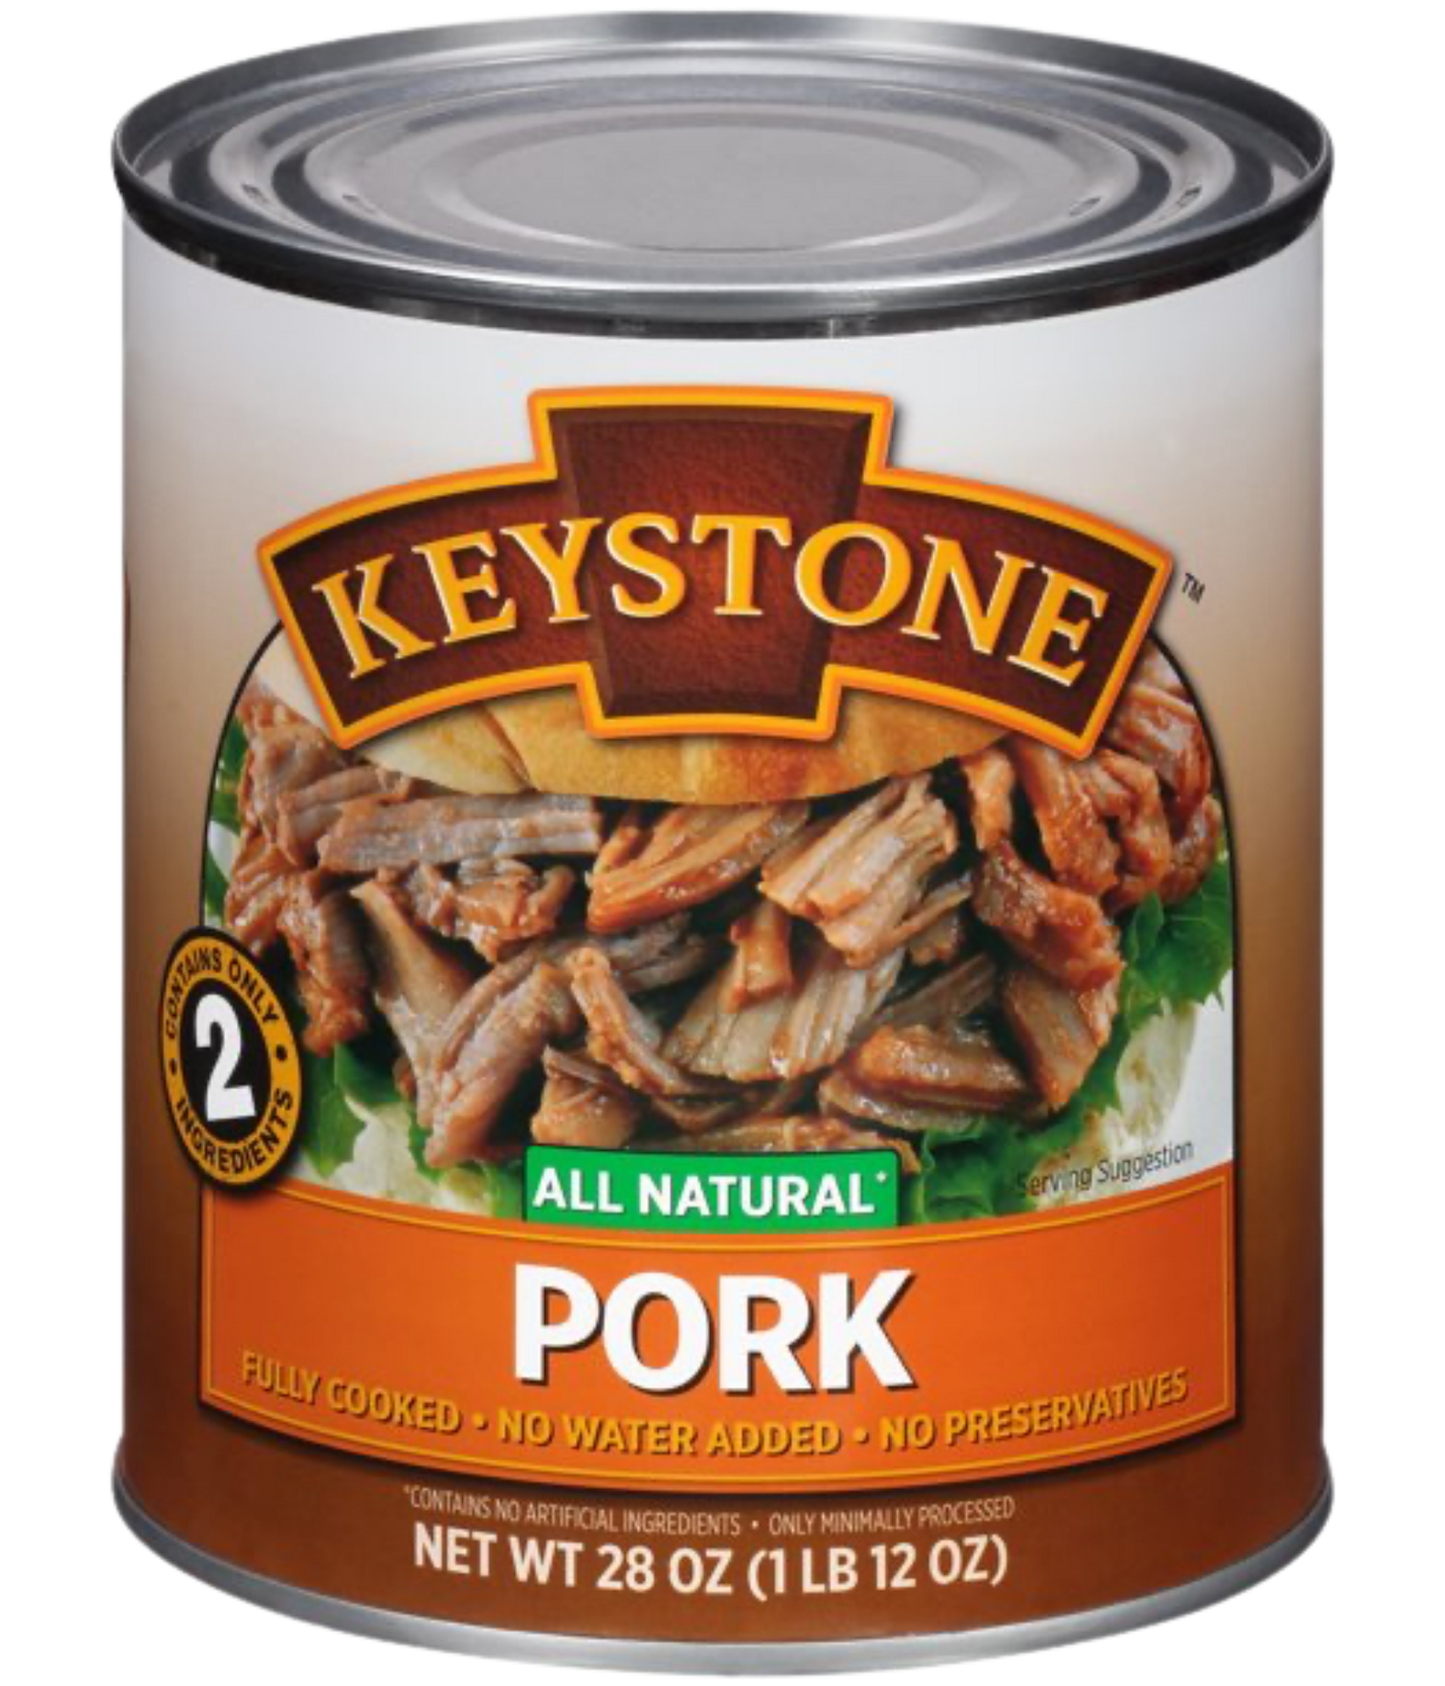 Keystone All Natural Pork, 28 oz Can